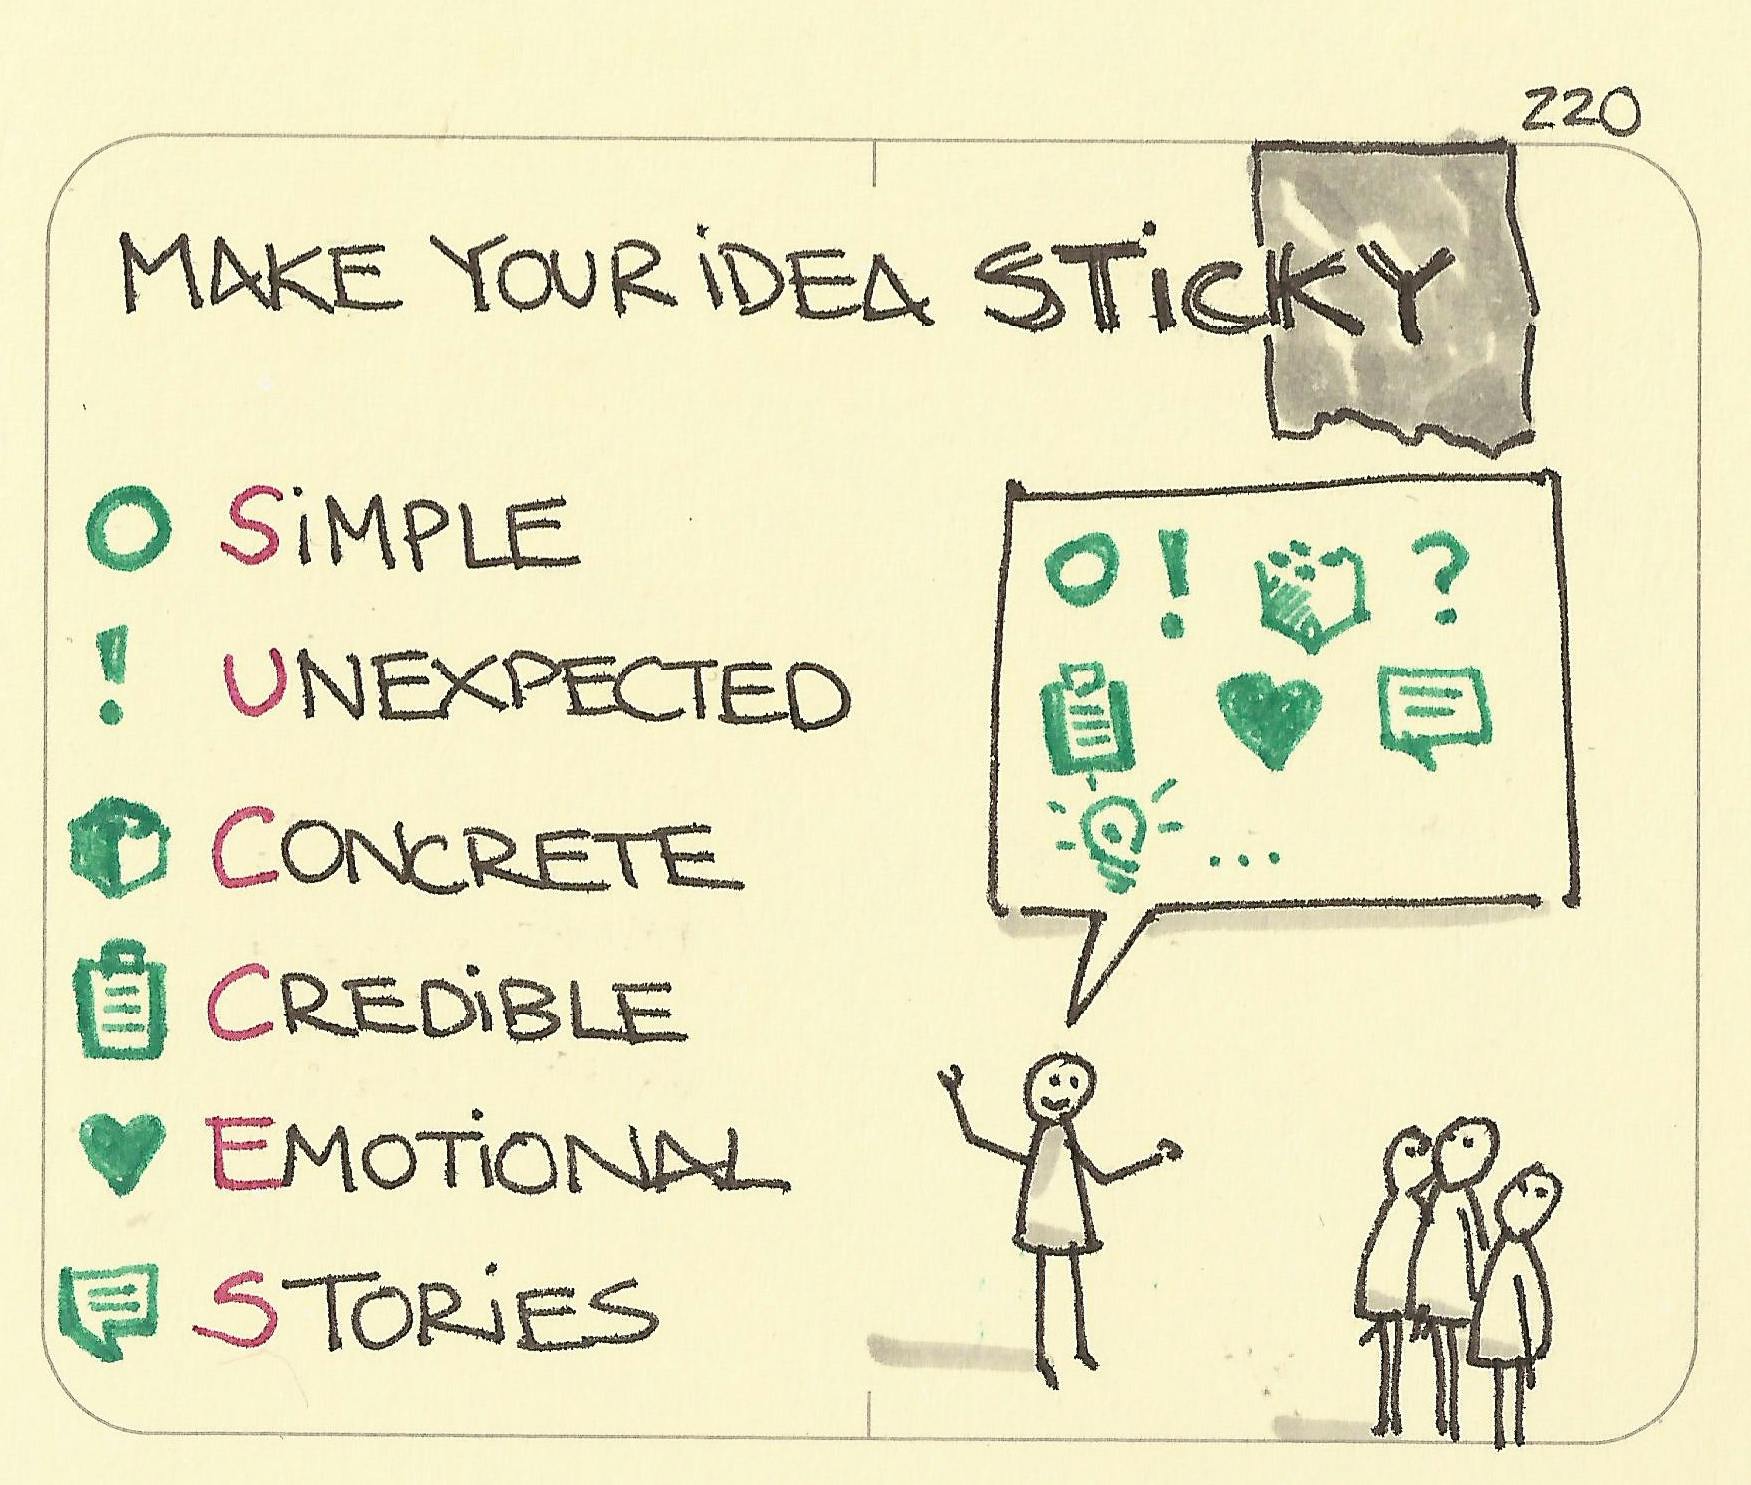 Make your idea sticky - Sketchplanations